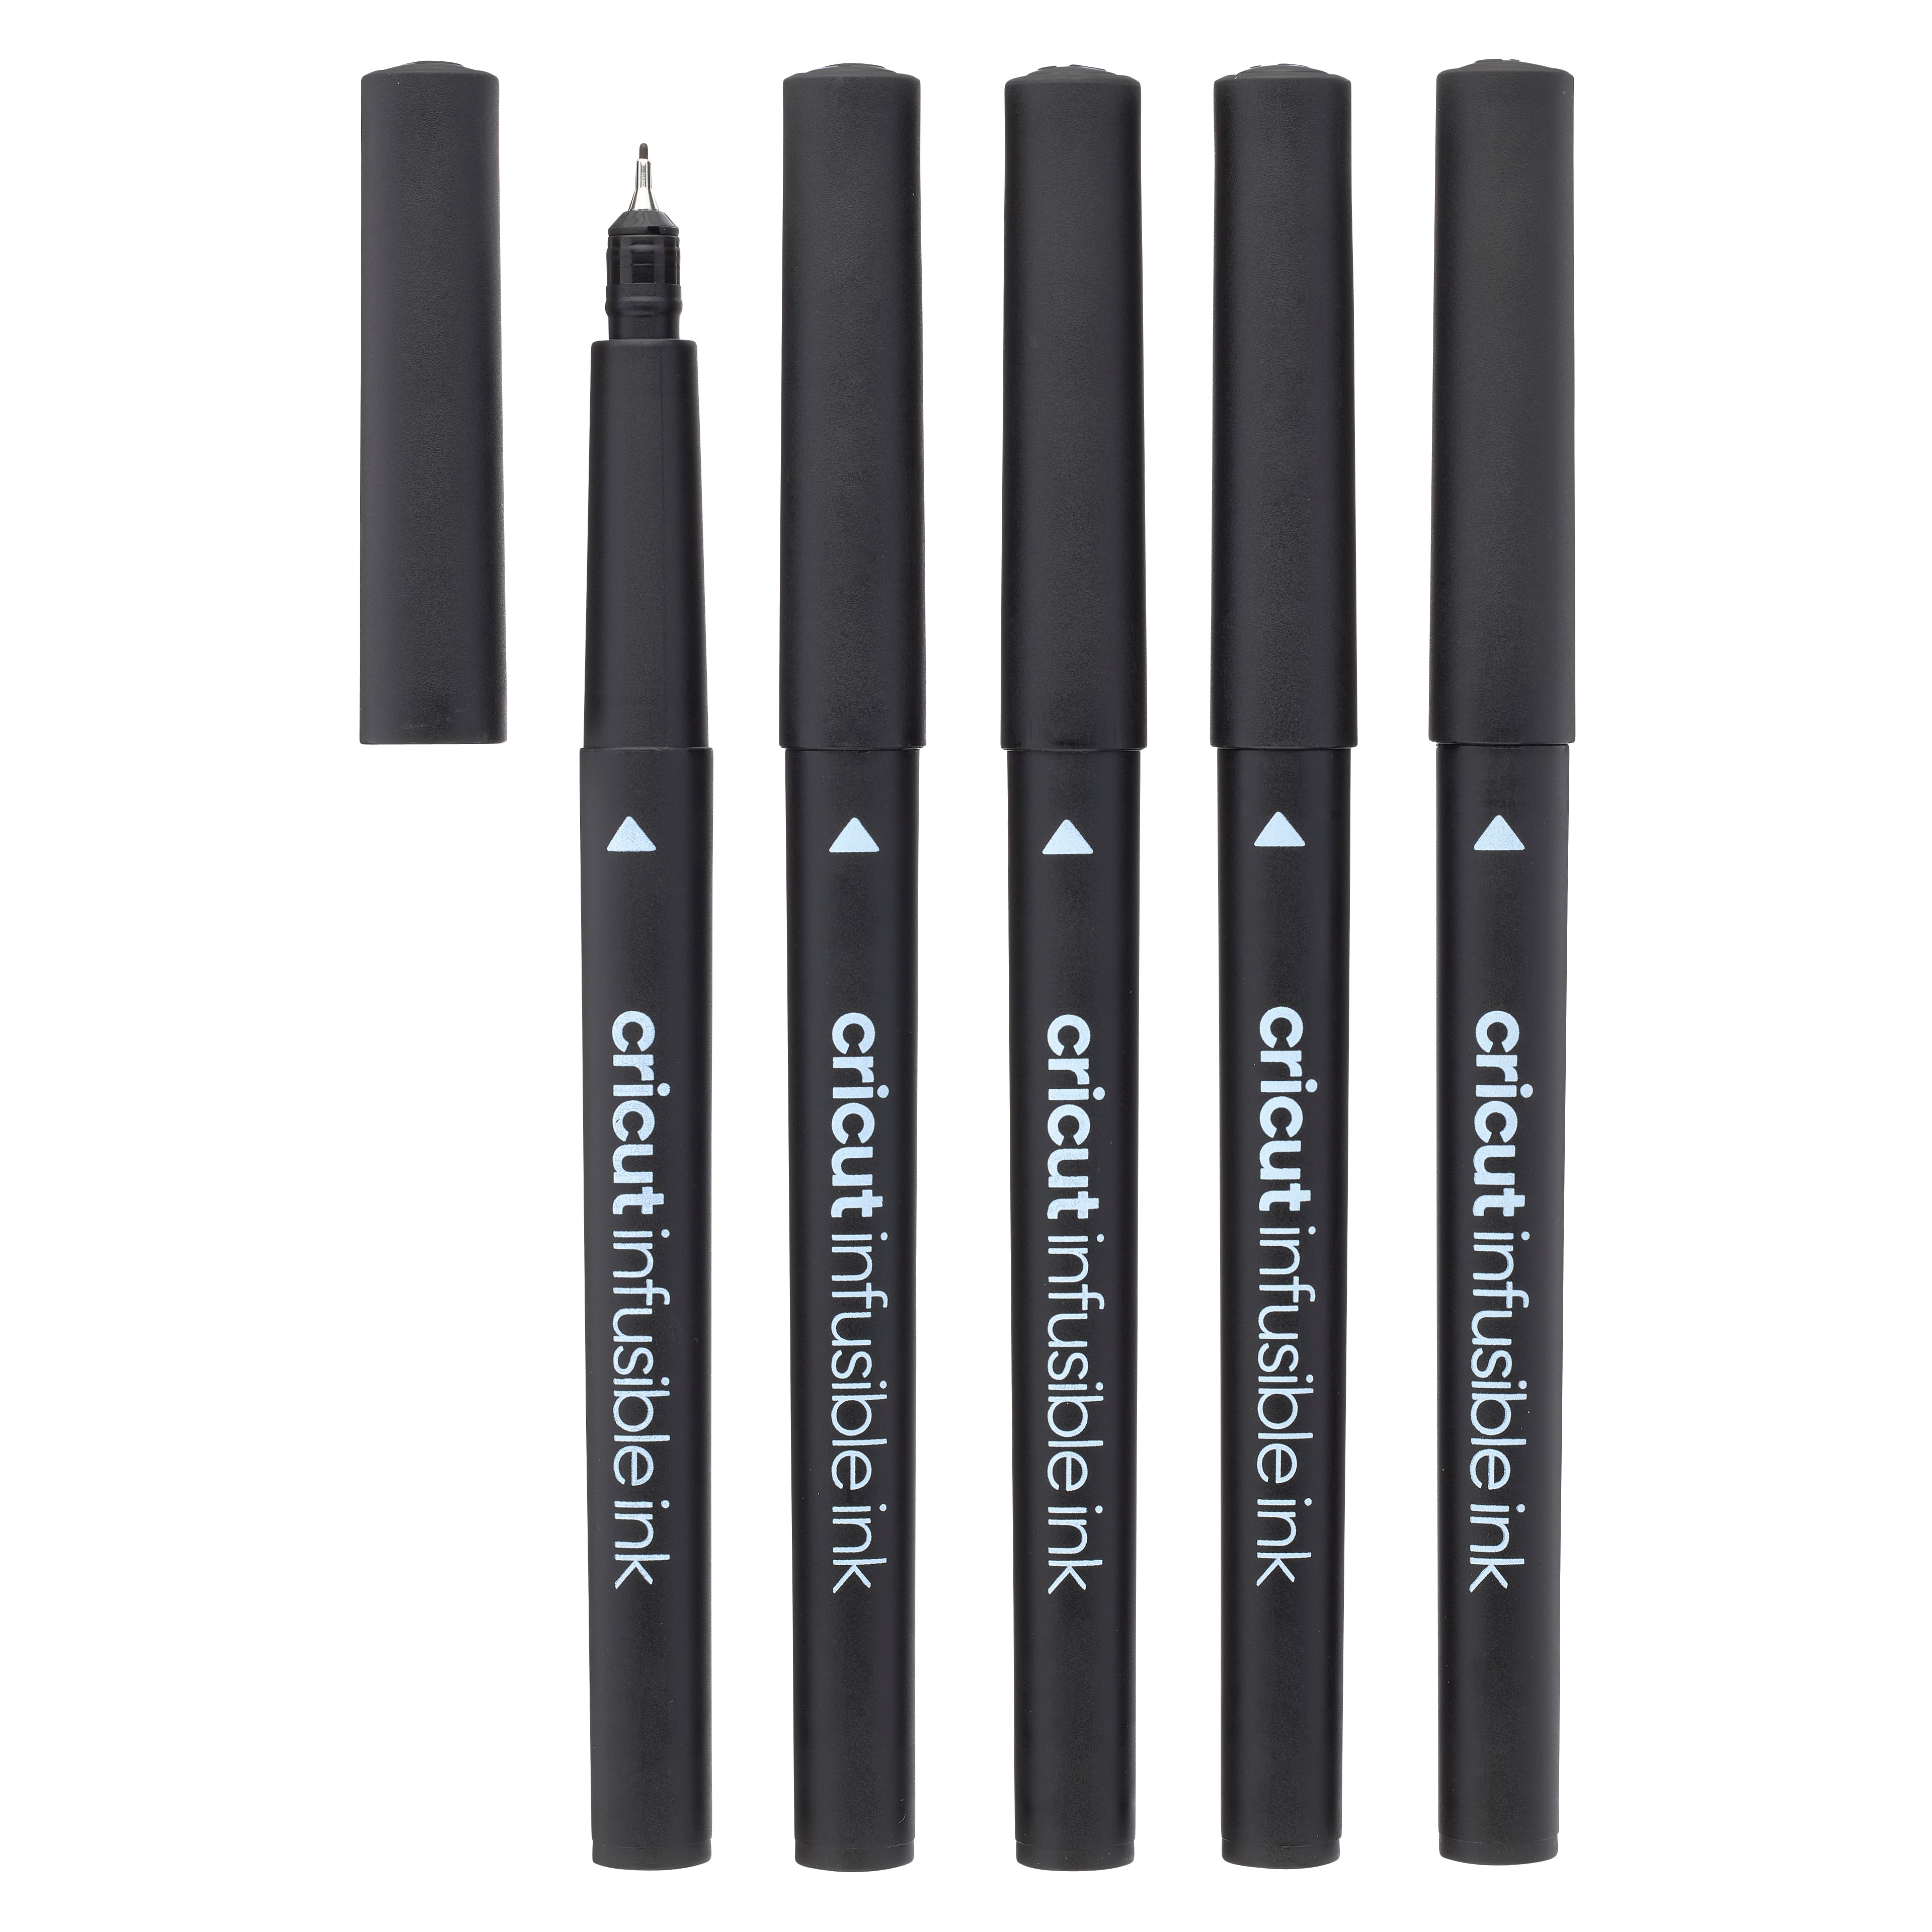 Cricut Infusible Ink Black Pens - 5 ct